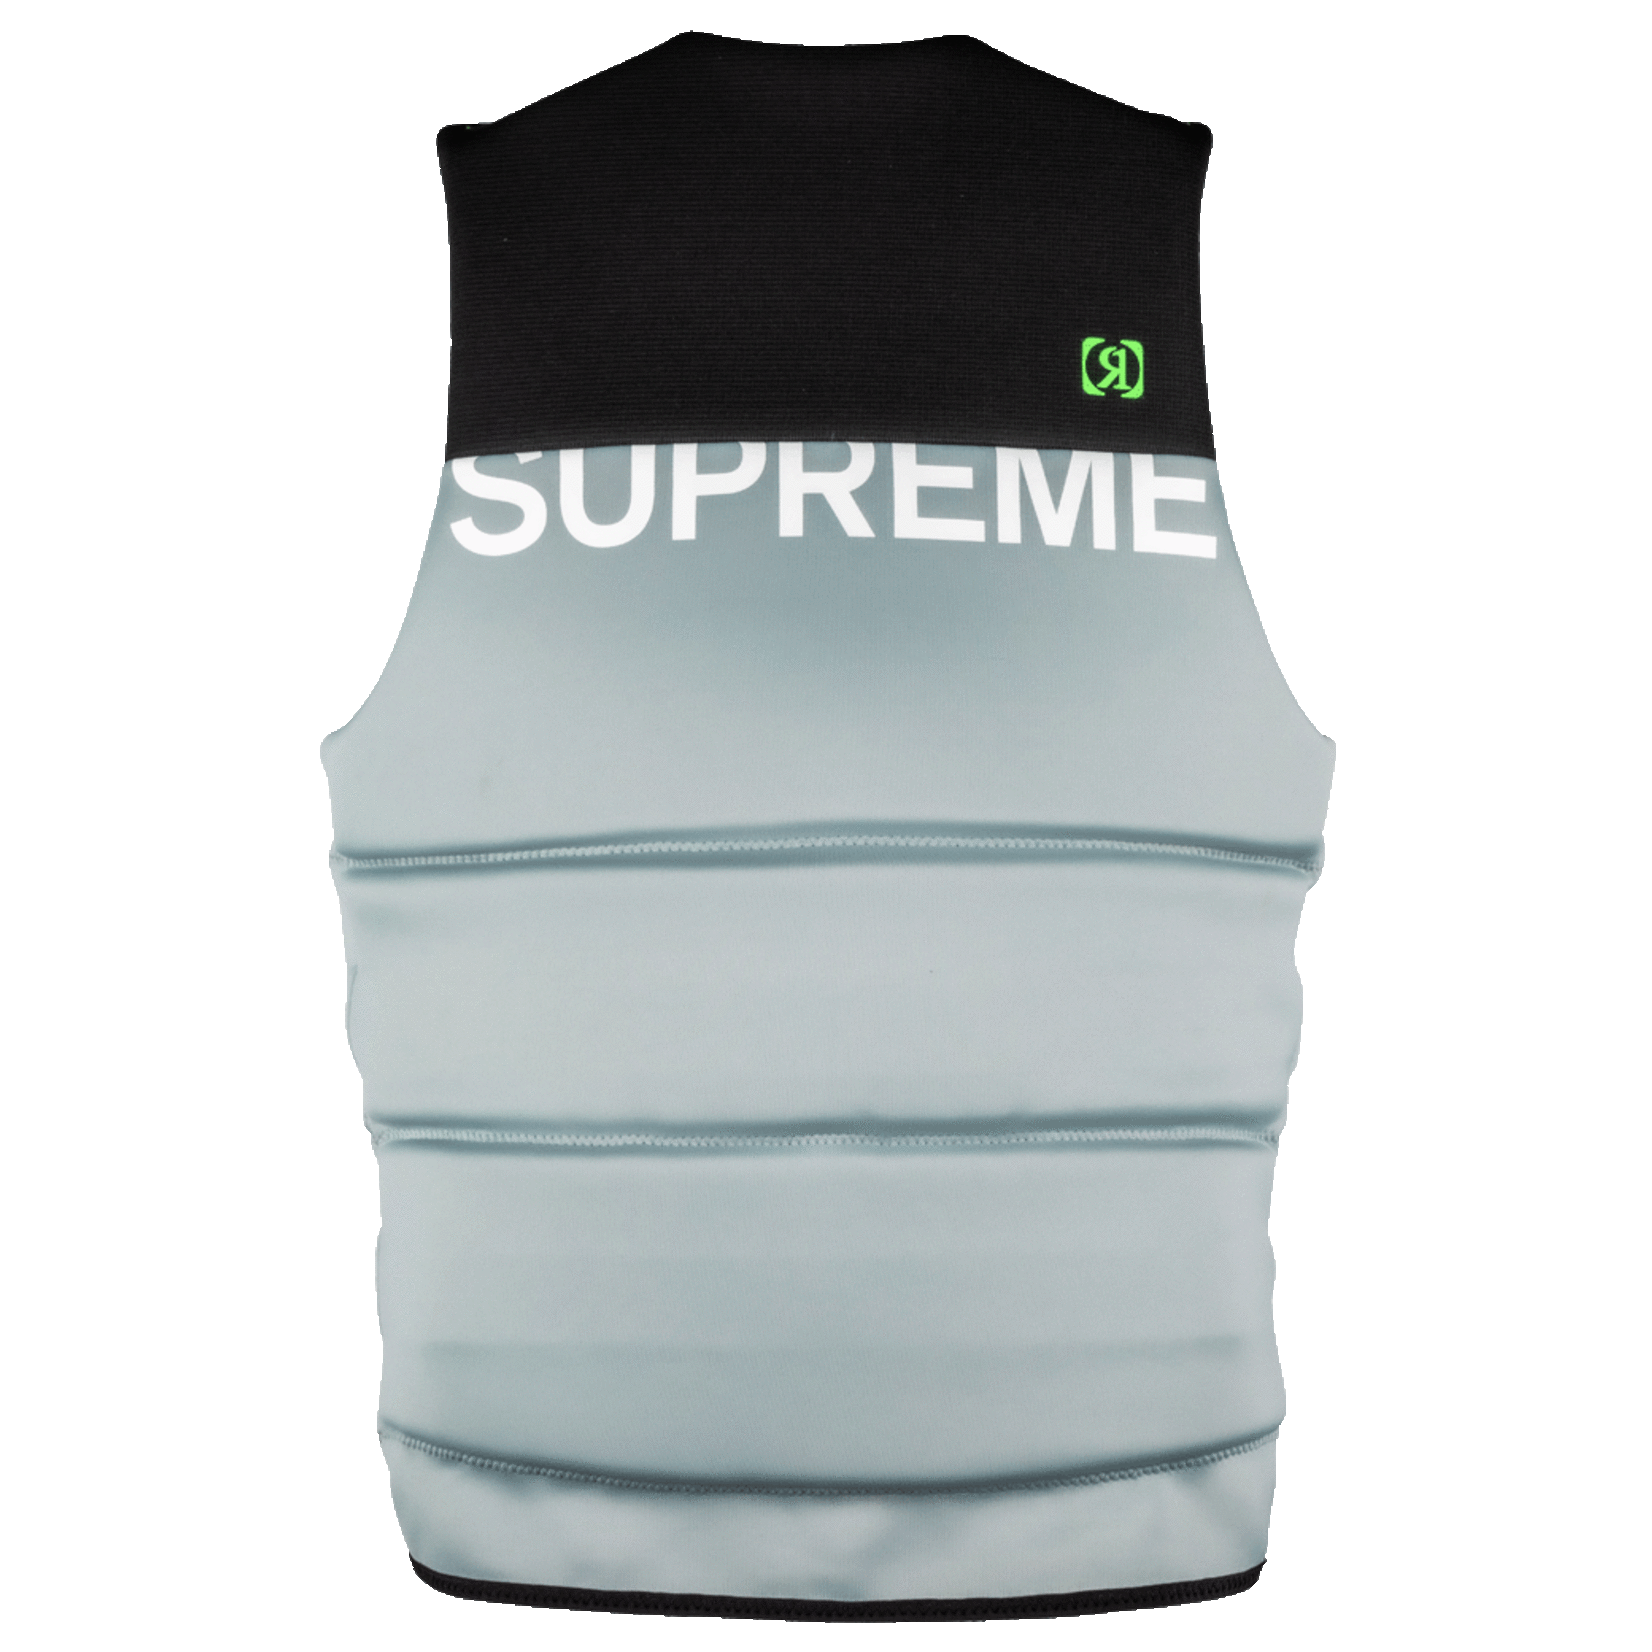 Supreme - Yes - US/CA CGA Life Vest - Charcoal Grey / Black - Sun 